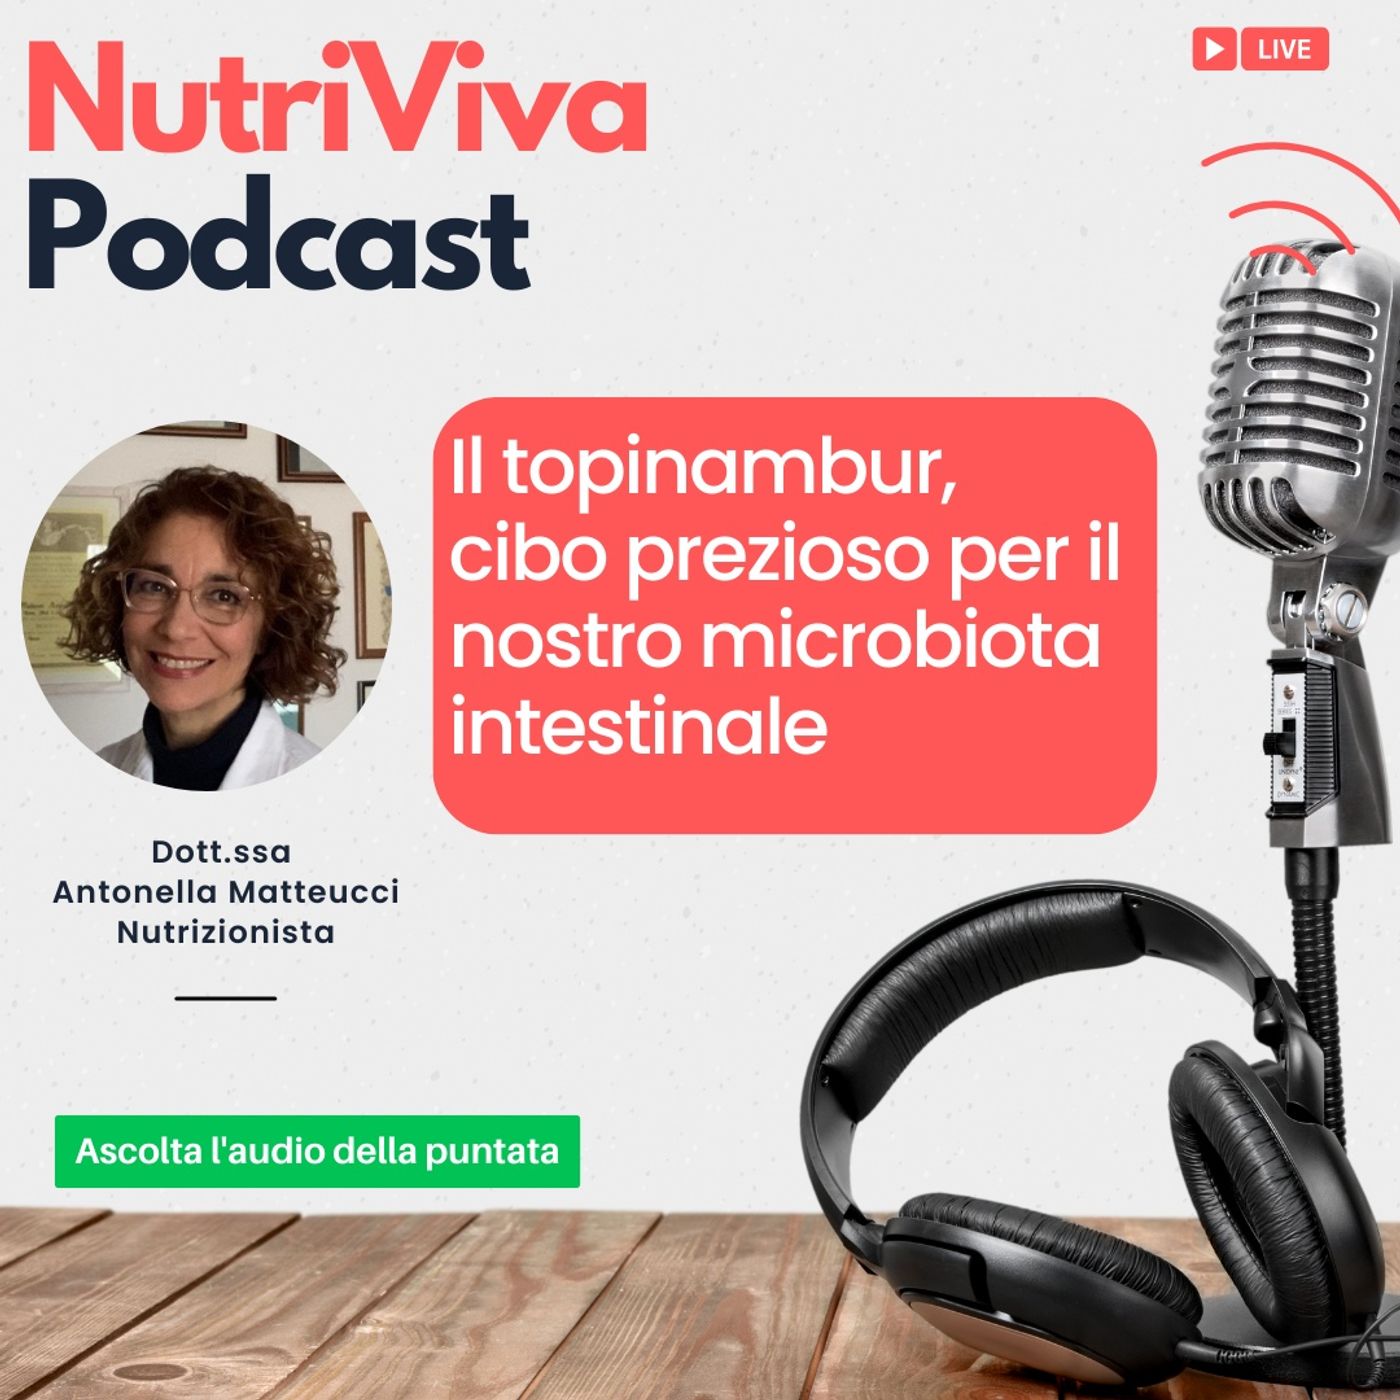 Il topinambur importante per il microbiota intestinale  Podcast 62928dae47dddfb318aaa425ba86bfab